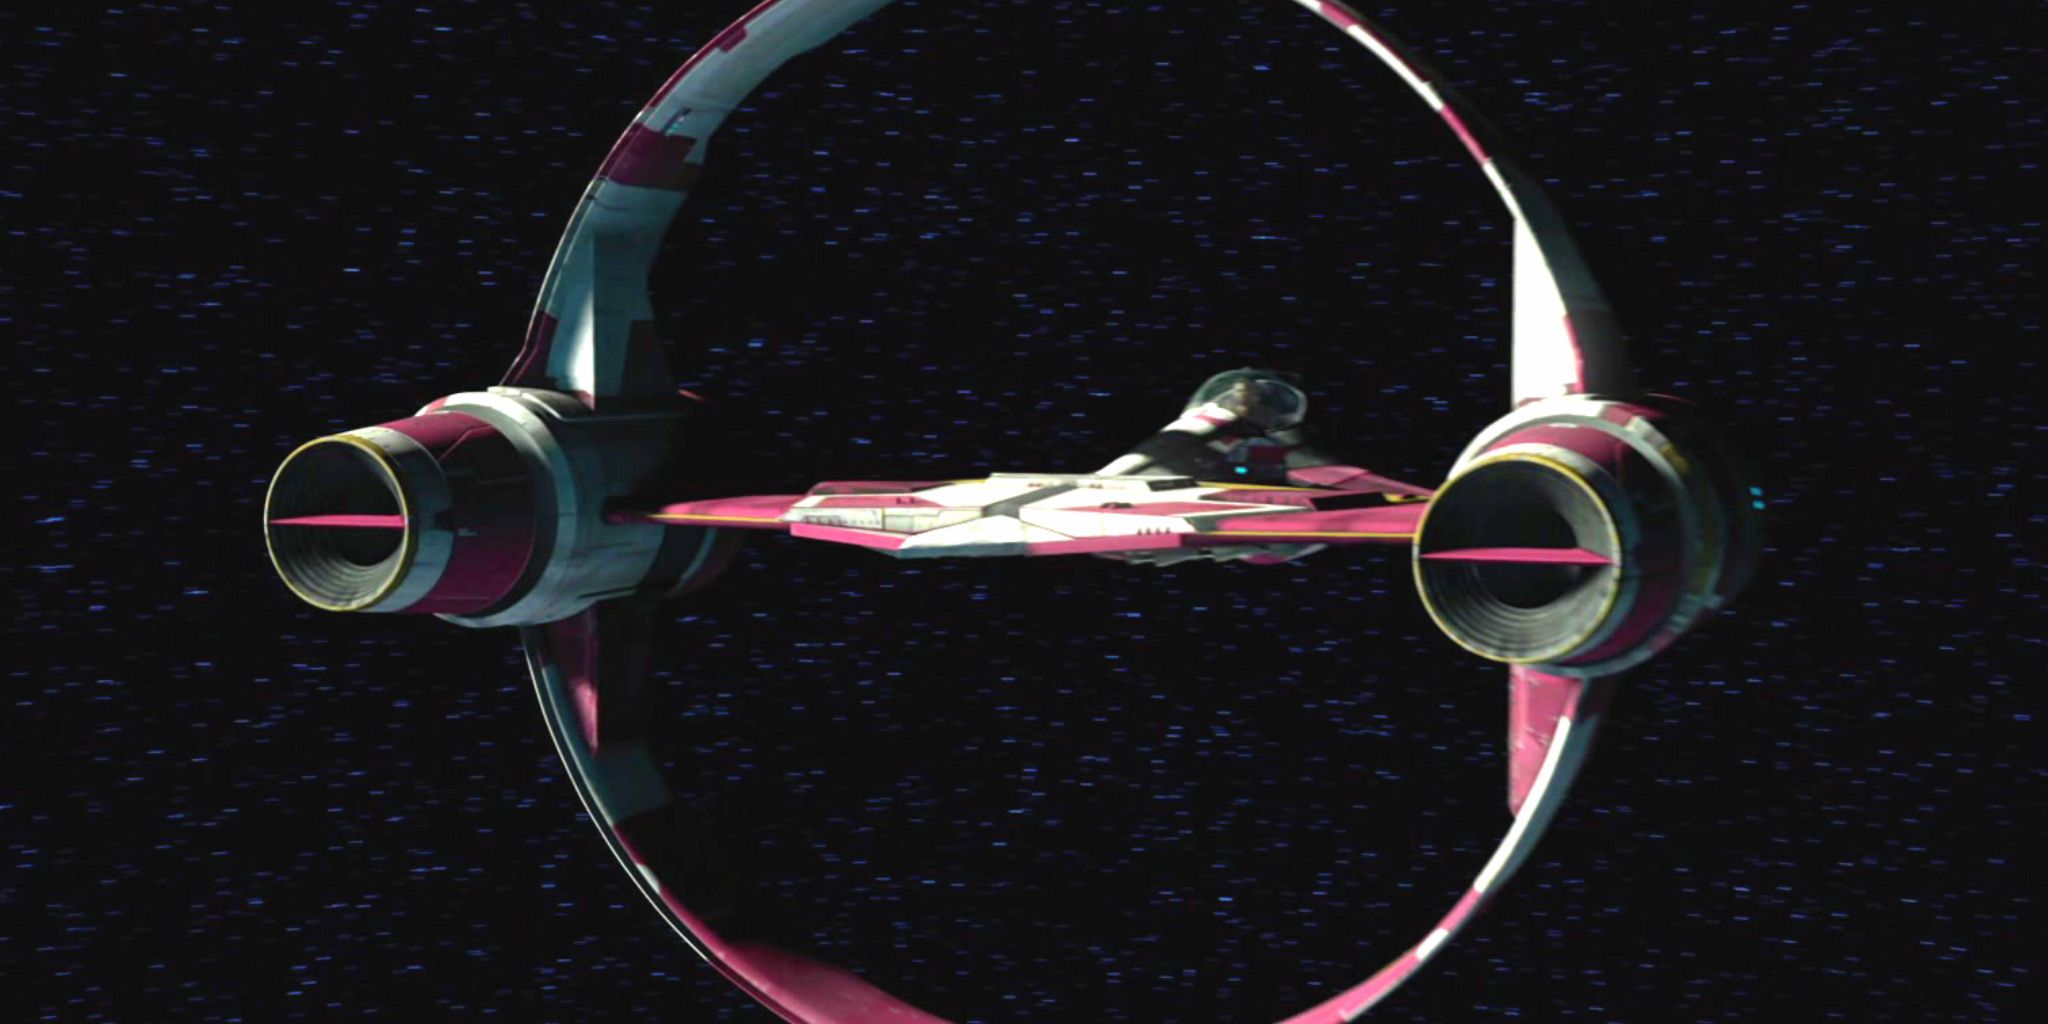 Obi-Wan Kenobi using his hyperspace ring in Attack of the Clones